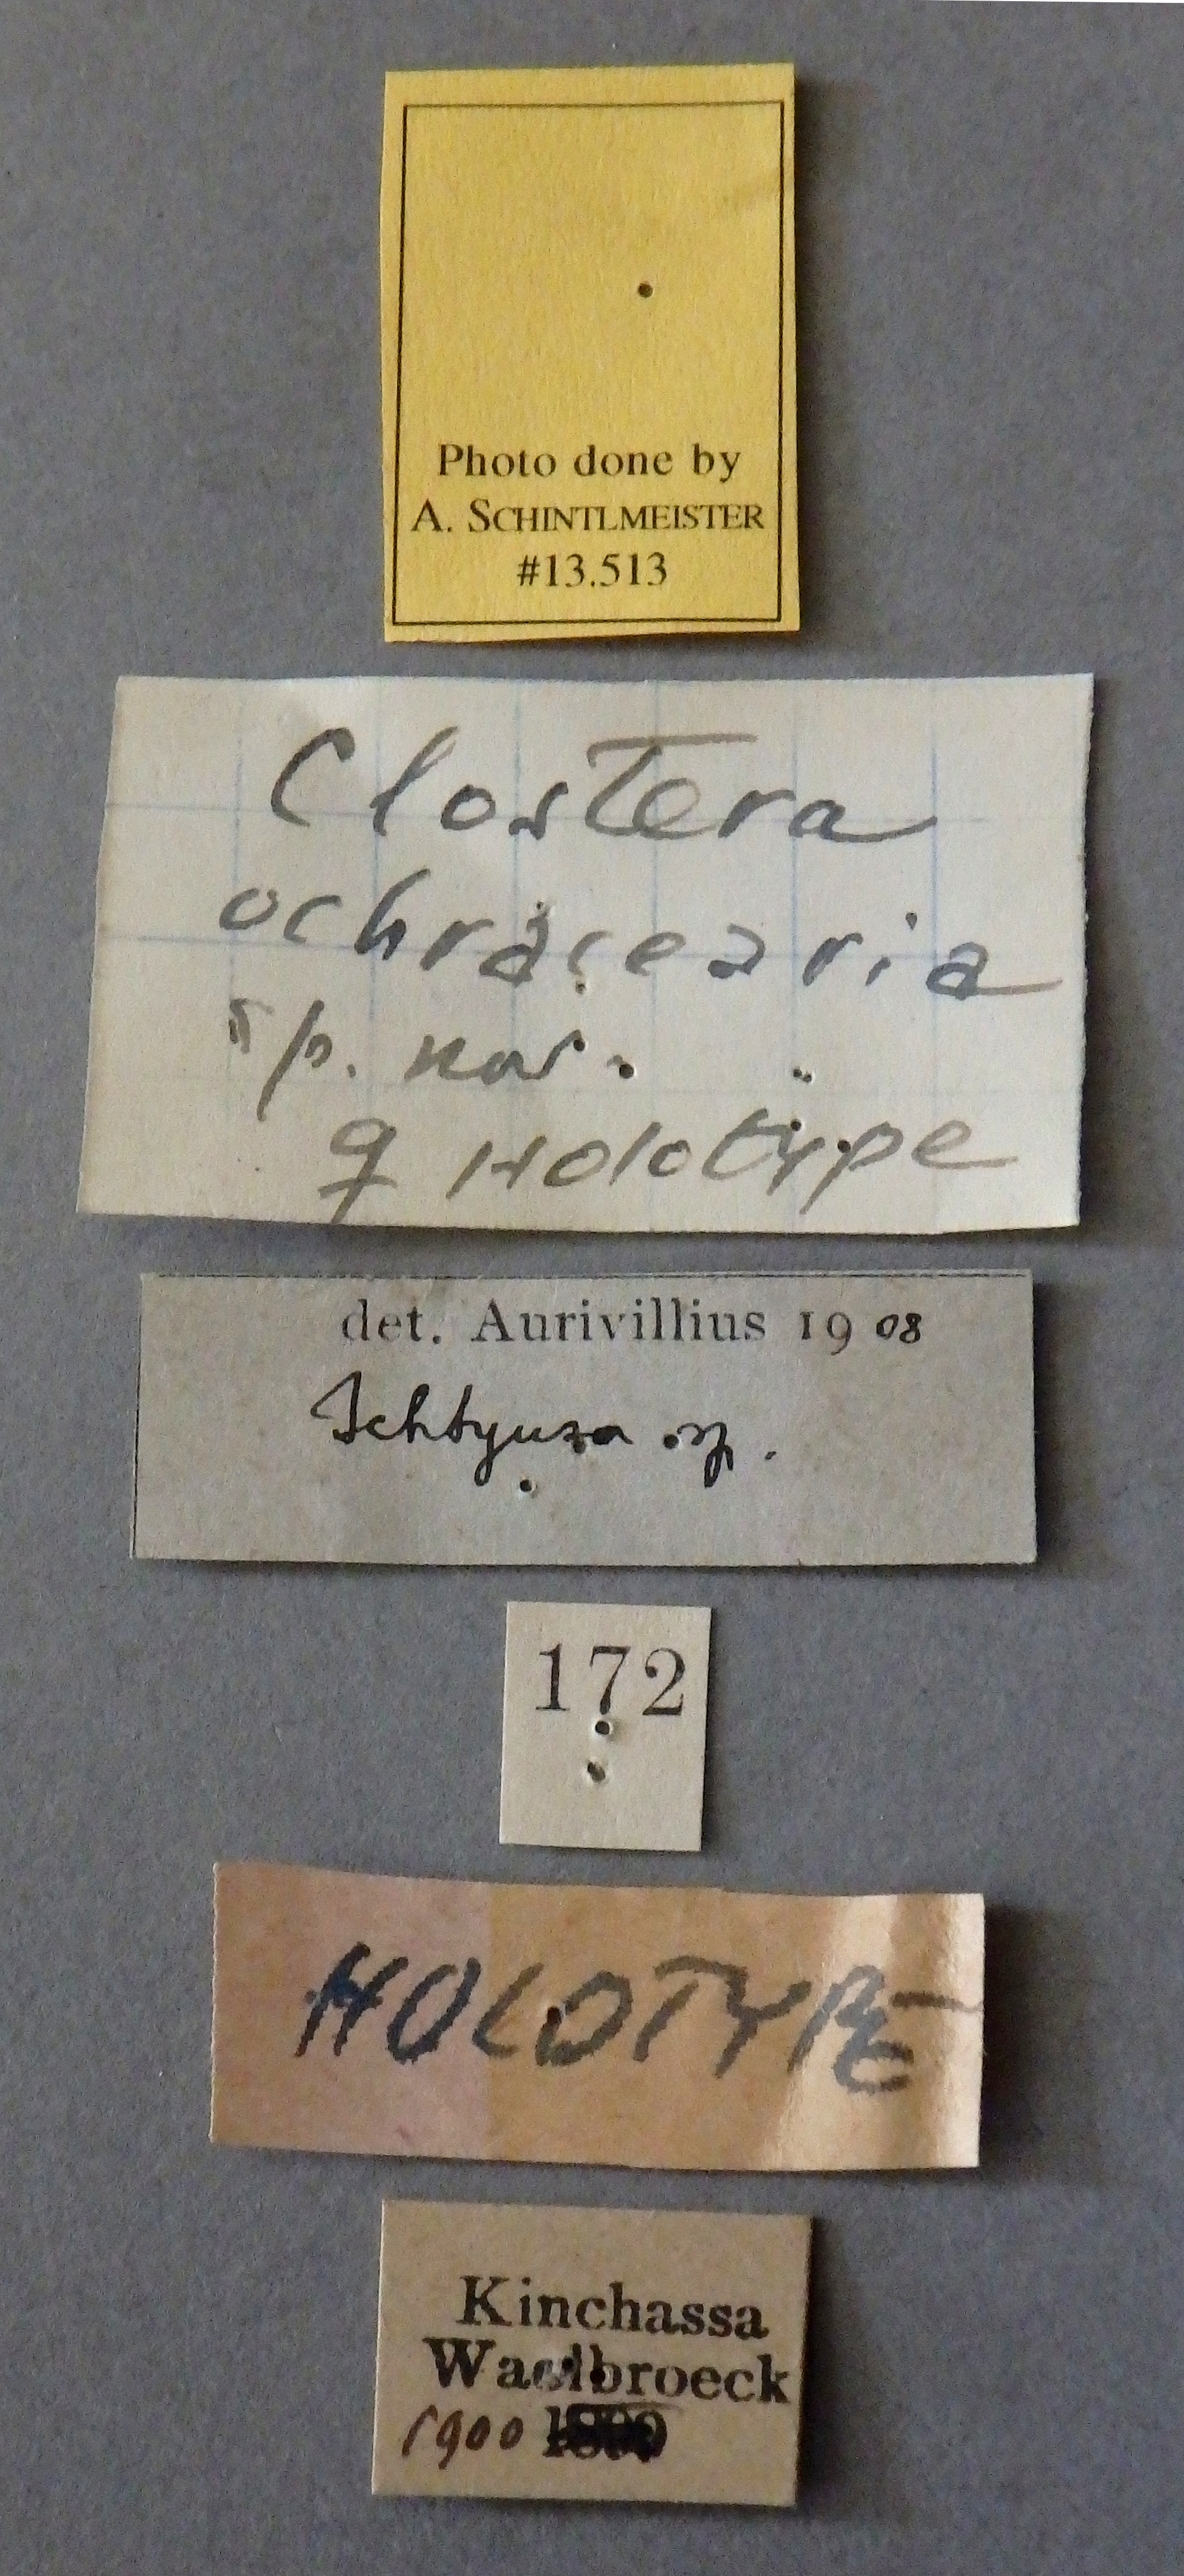 Clostera ochracearia ht Lb.jpg